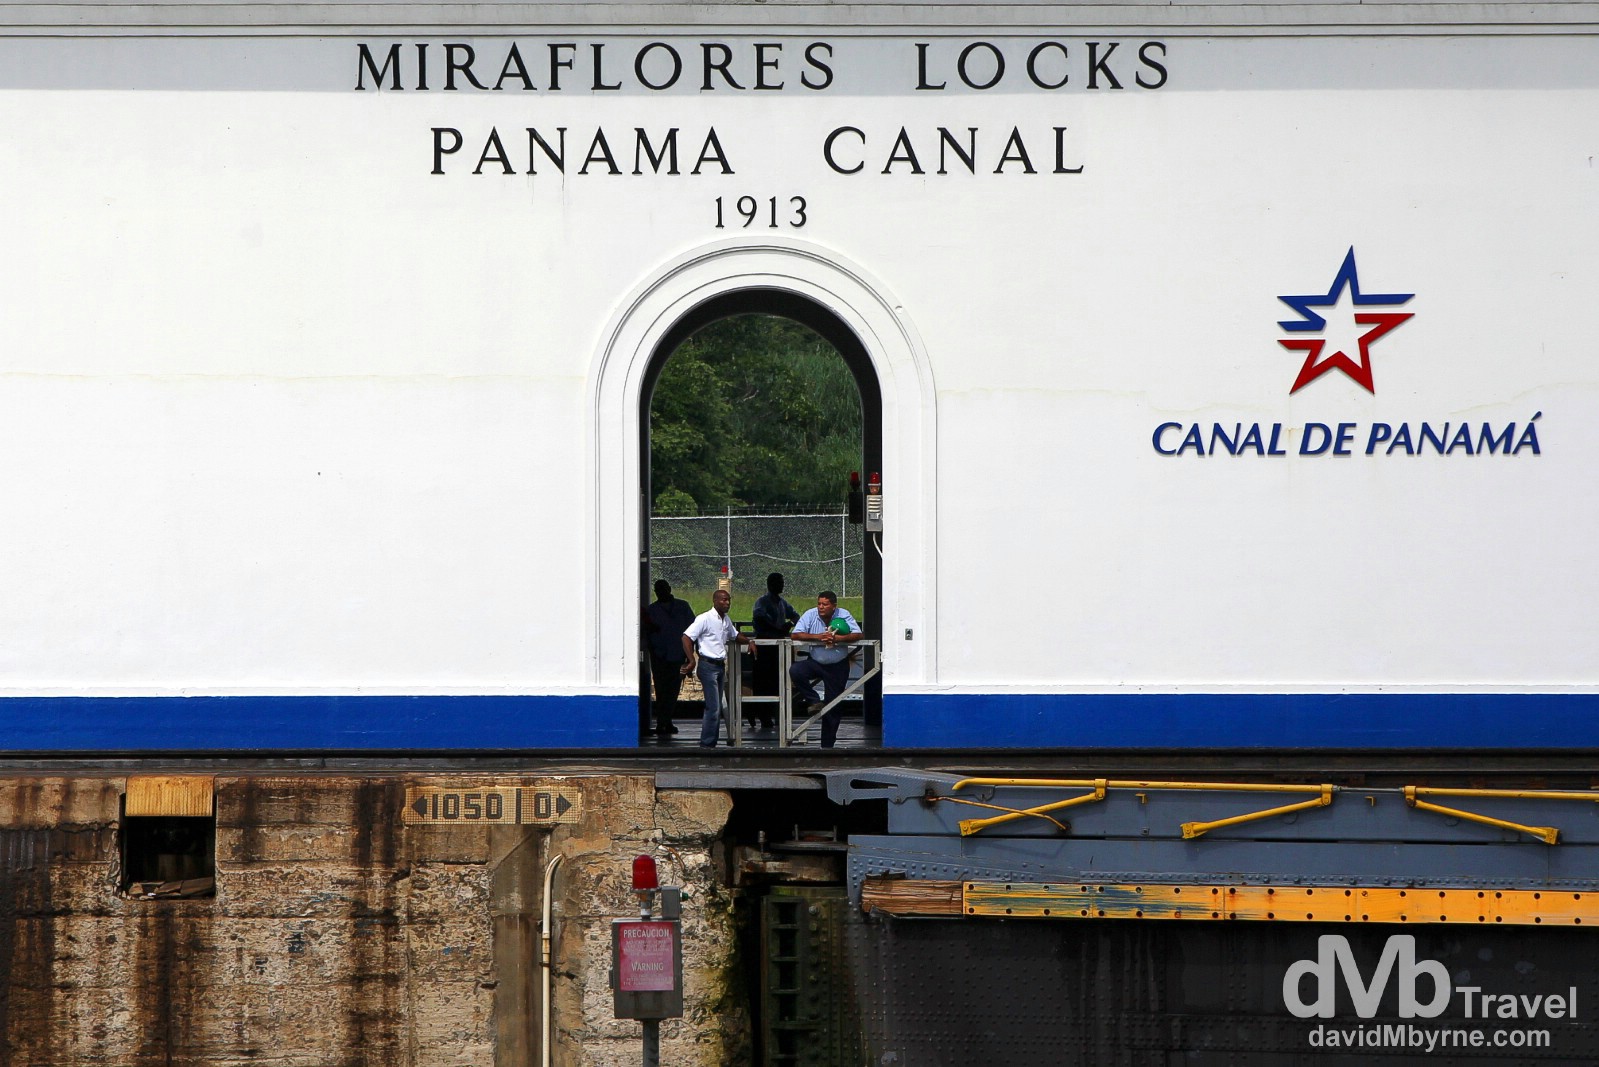 Miraflores Locks of the Panama Canal, Panama. July 1st 2013.